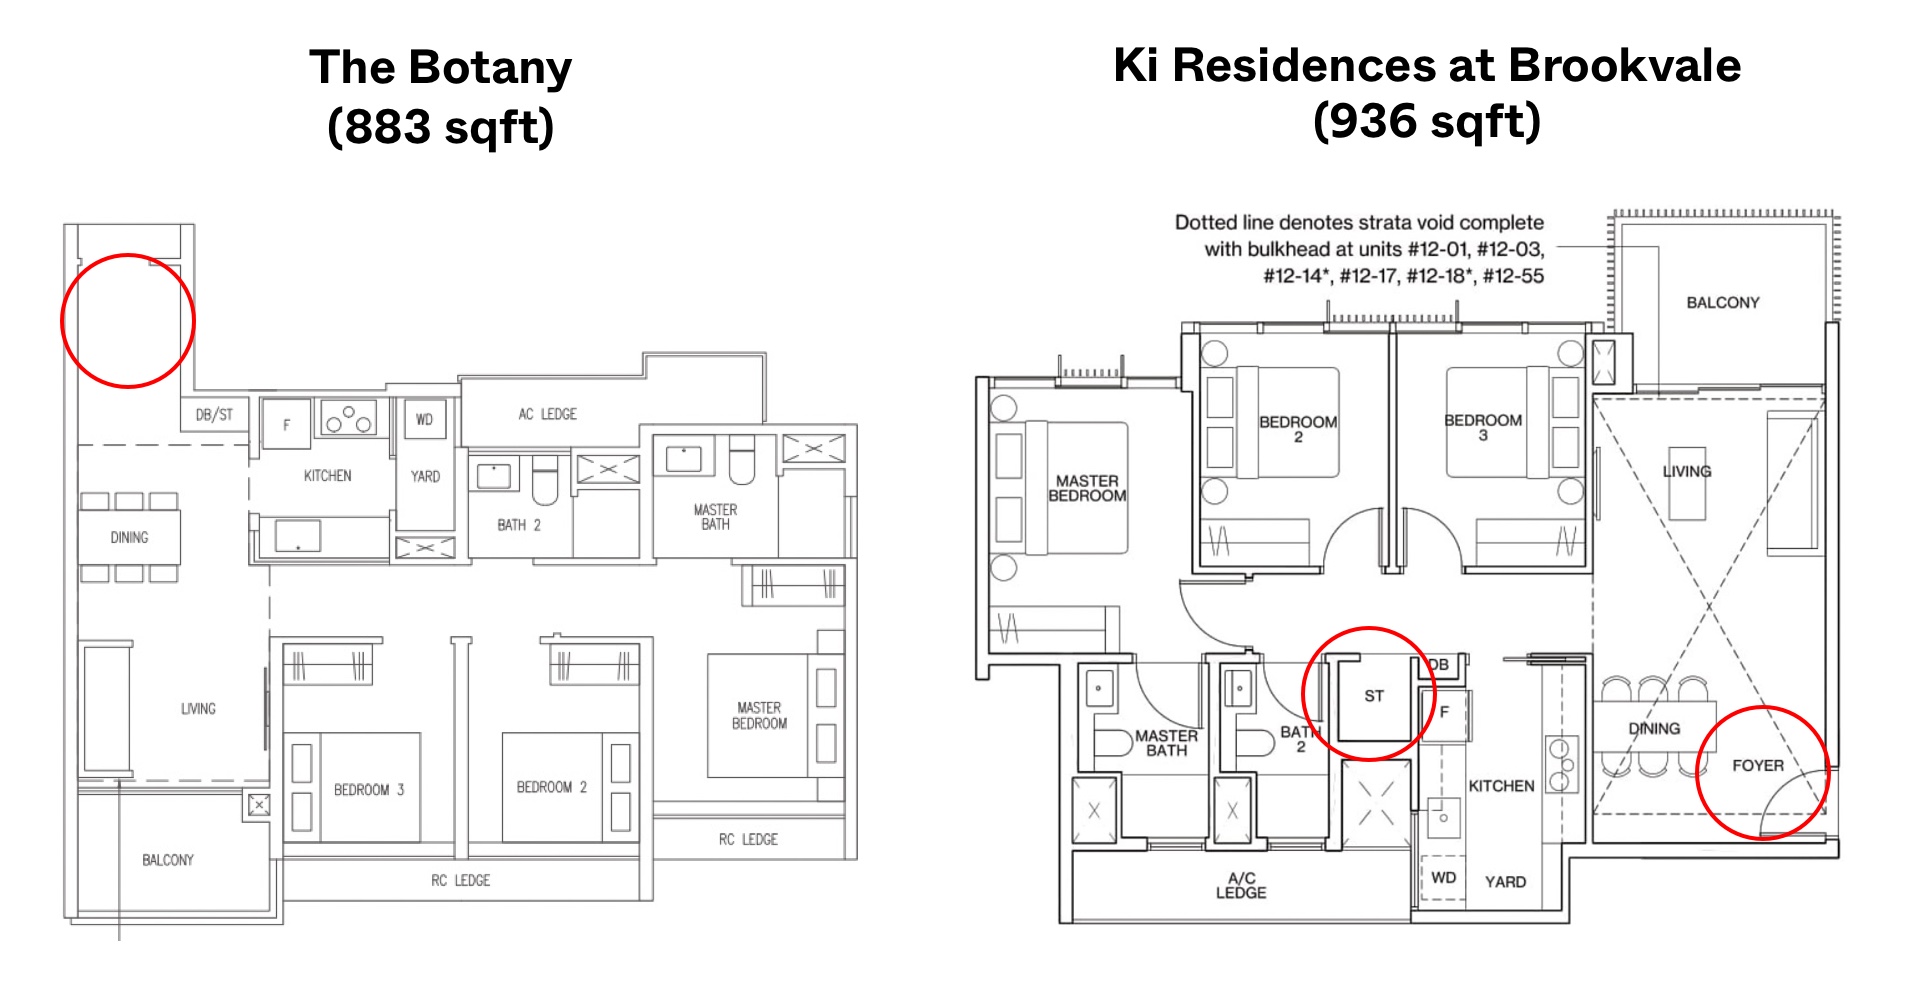 The Botany vs Ki Residences at Brookvale floor plan